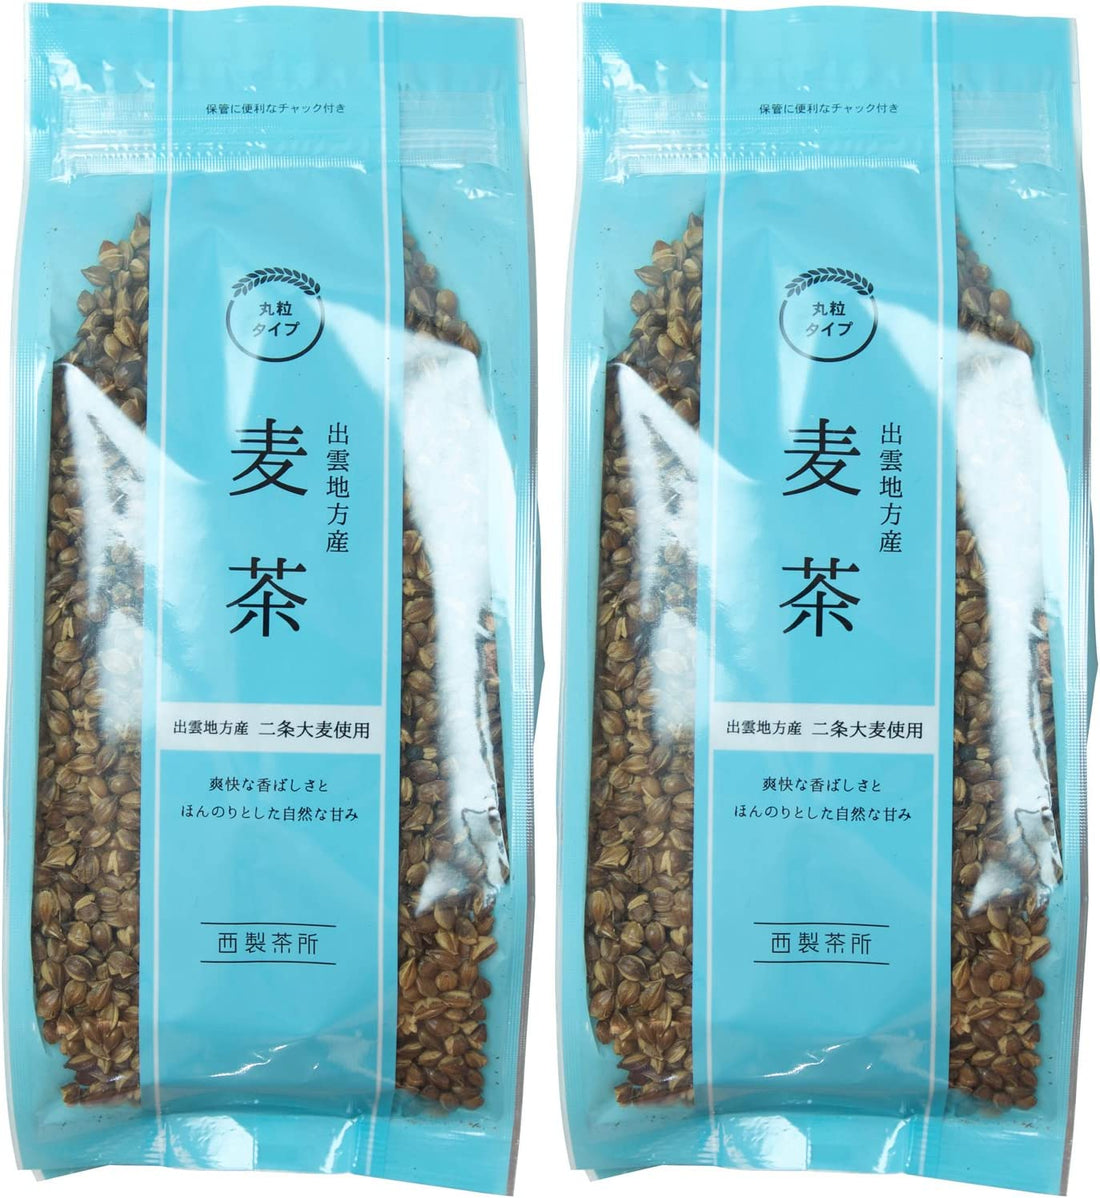 Nishi Tea Factory Round Grain Type Barley Tea from Izumo Region 400g x 2 Bags - NihonMura